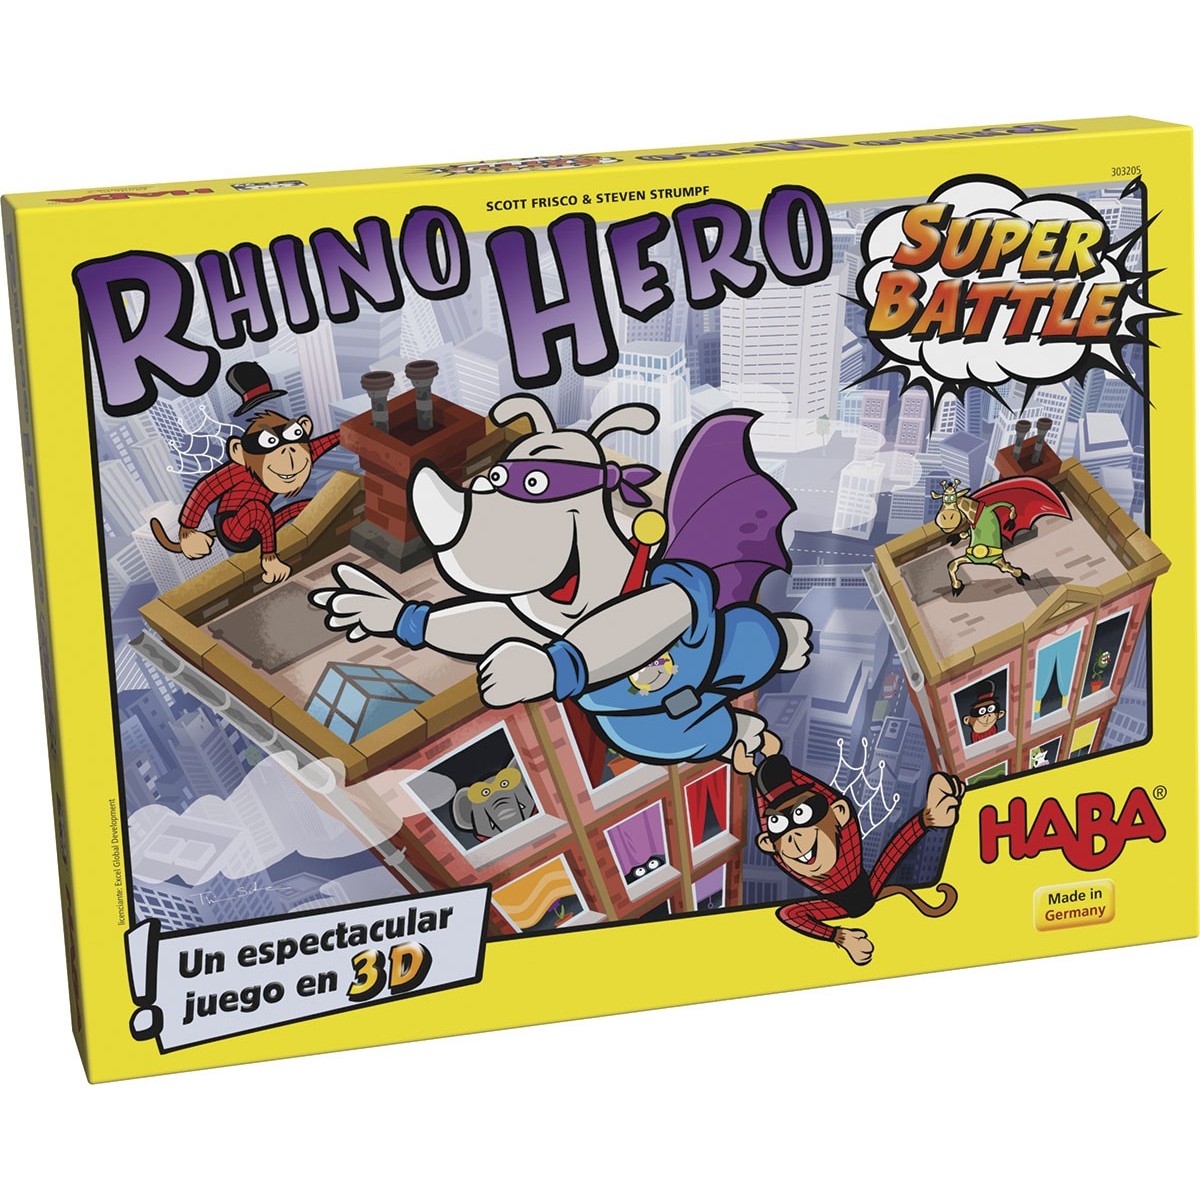 Rhino Hero super battle - HABA